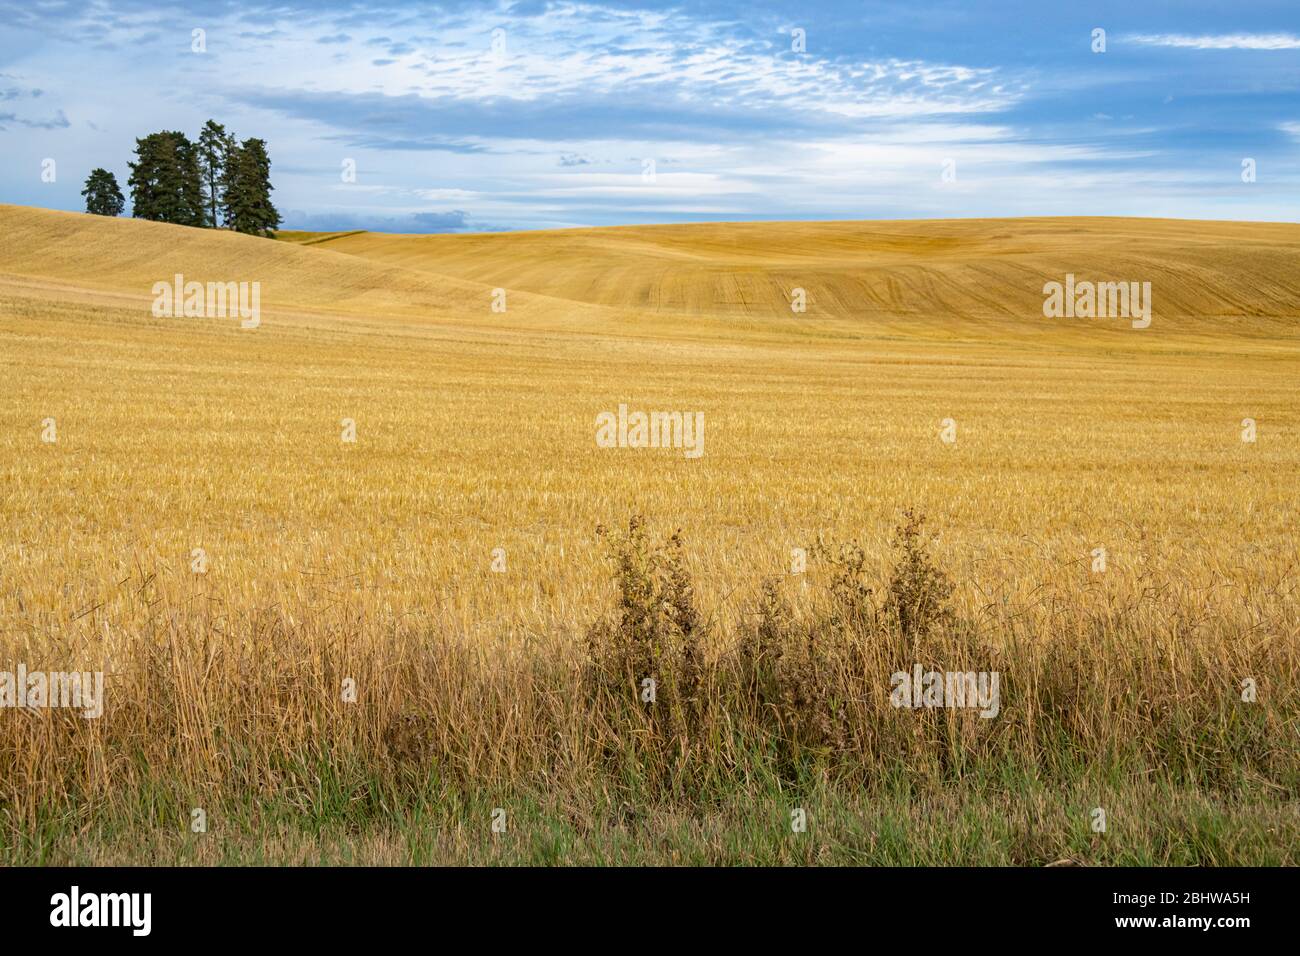 Golden Rolling Hills of Wheat Fields, Palouse, Washington State Stock Photo